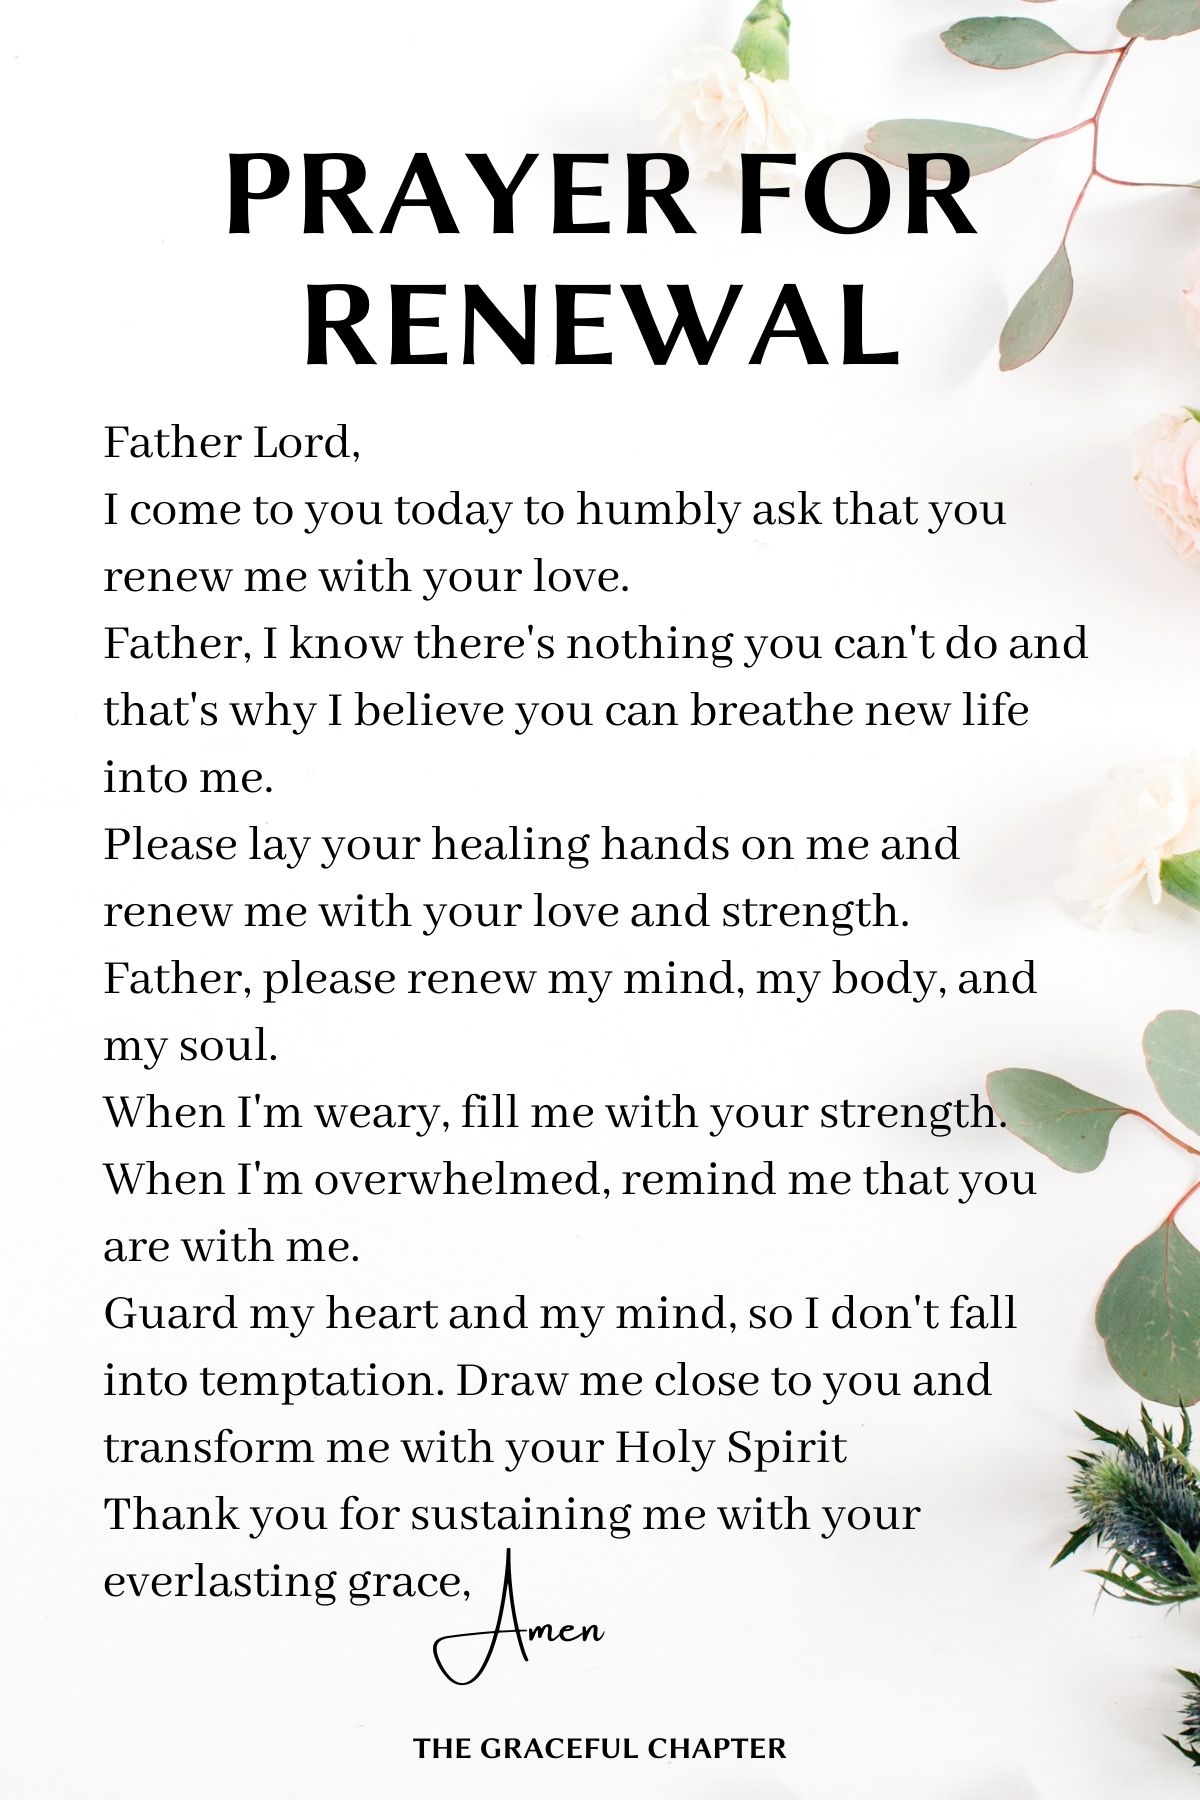 Prayer for renewal